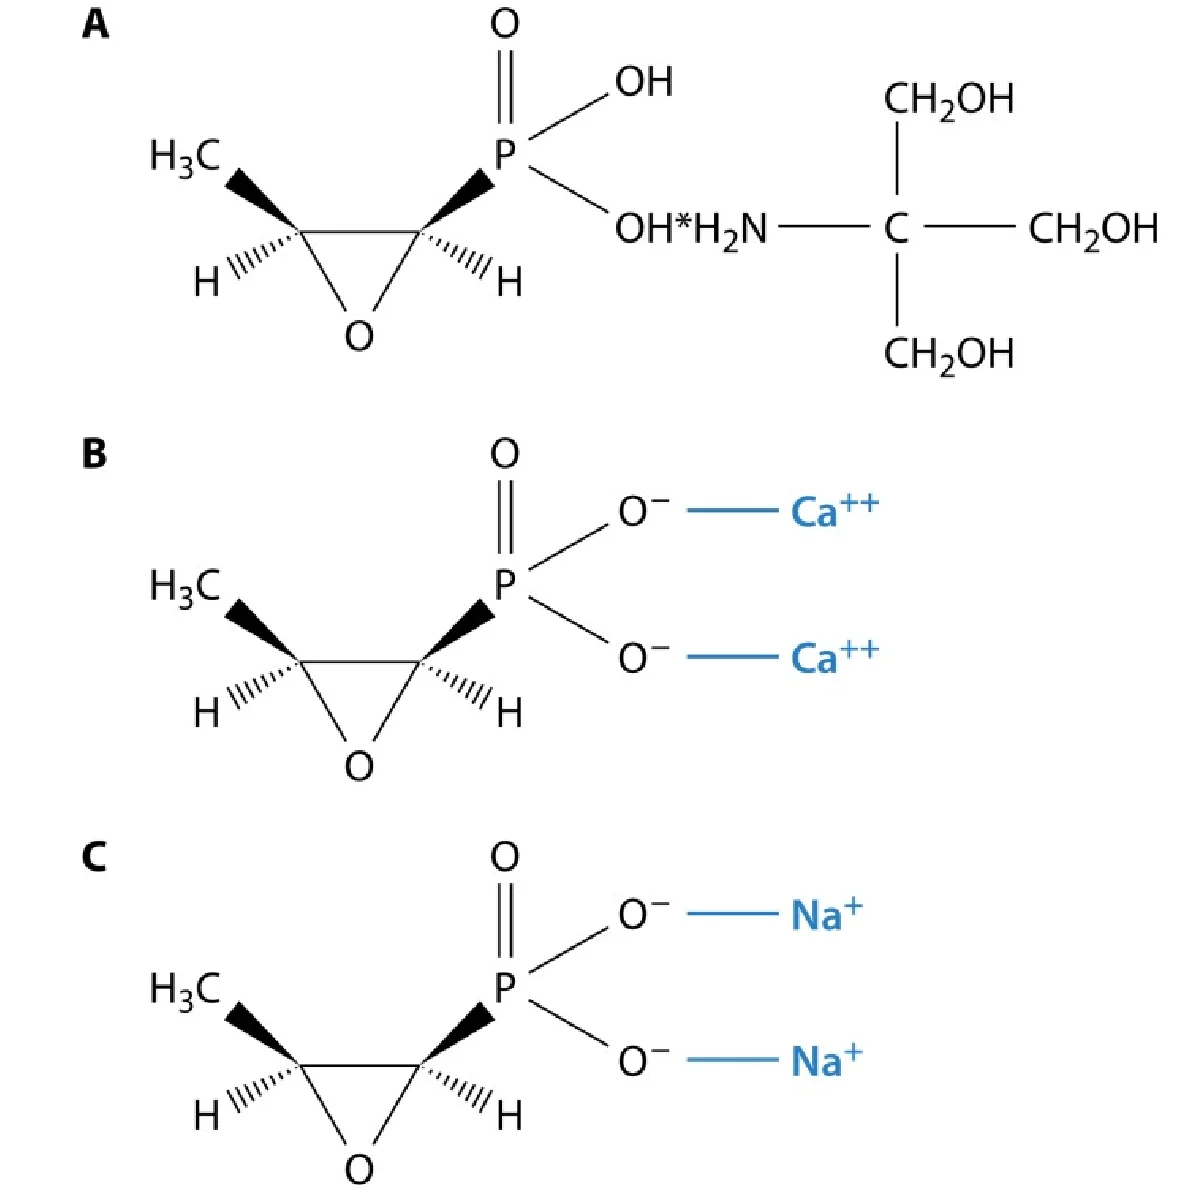 (A) Cấu trúc phân tử của fosfomycin trometamol. (B) Cấu trúc phân tử của canxi fosfomycin. (C) Cấu trúc phân tử của fosfomycin disodium.